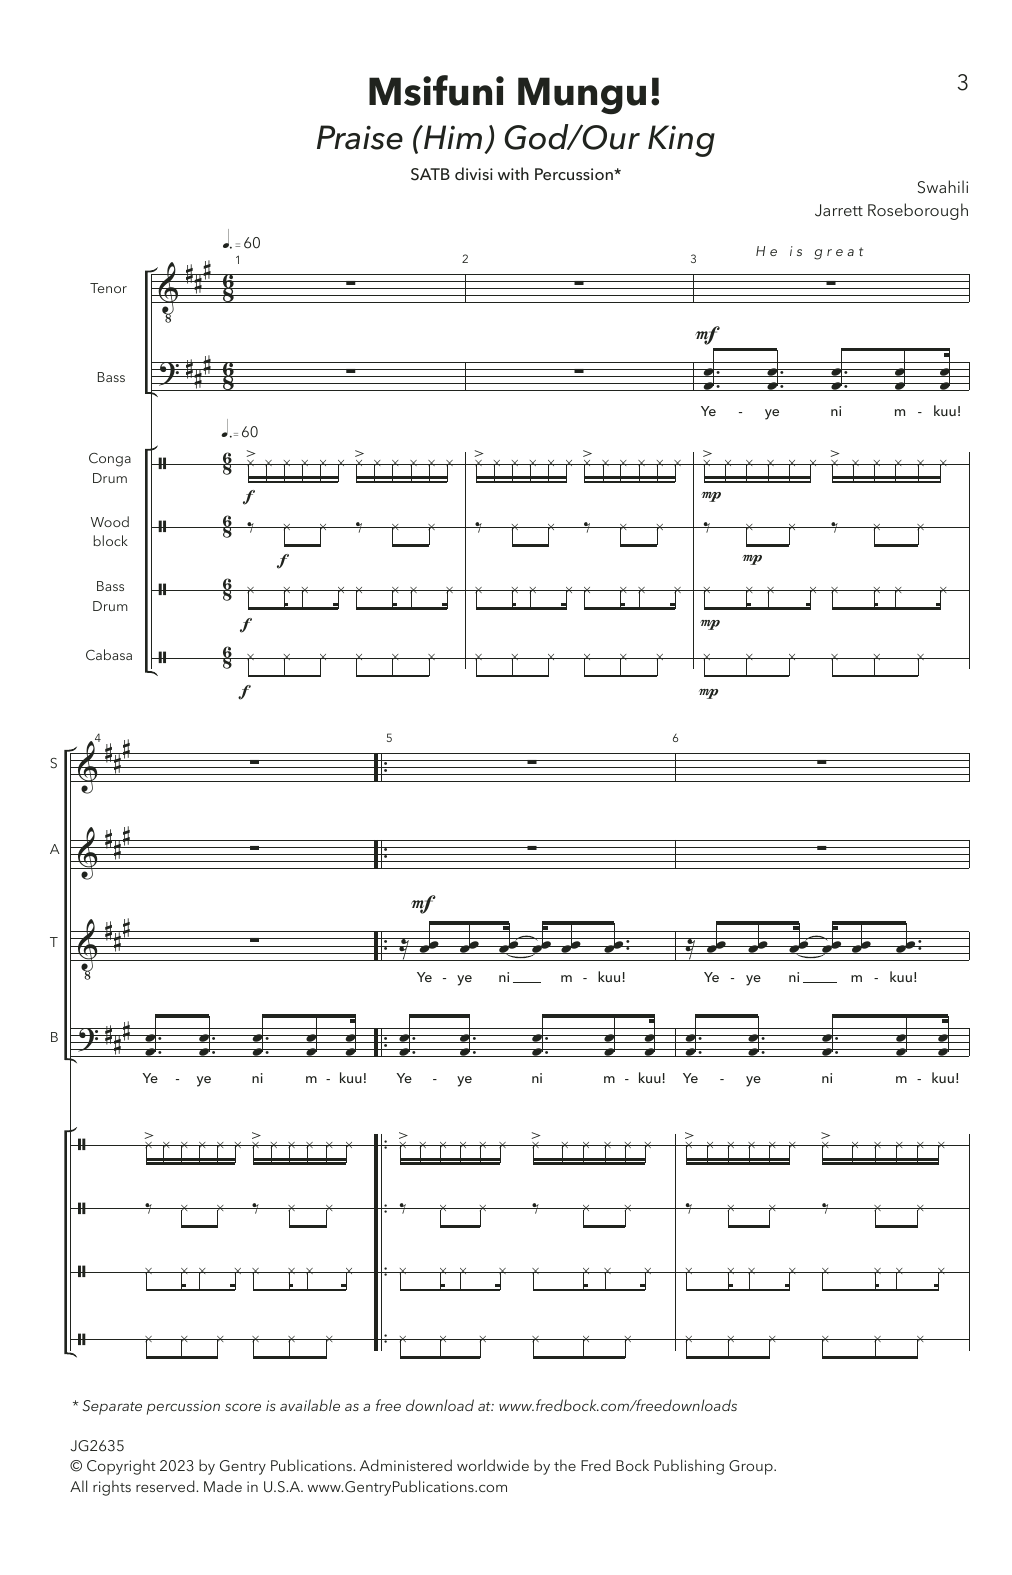 Download Jarrett Roseborough Msifuni Mungu! (Praise (Him) God/Our King) Sheet Music and learn how to play Choir PDF digital score in minutes